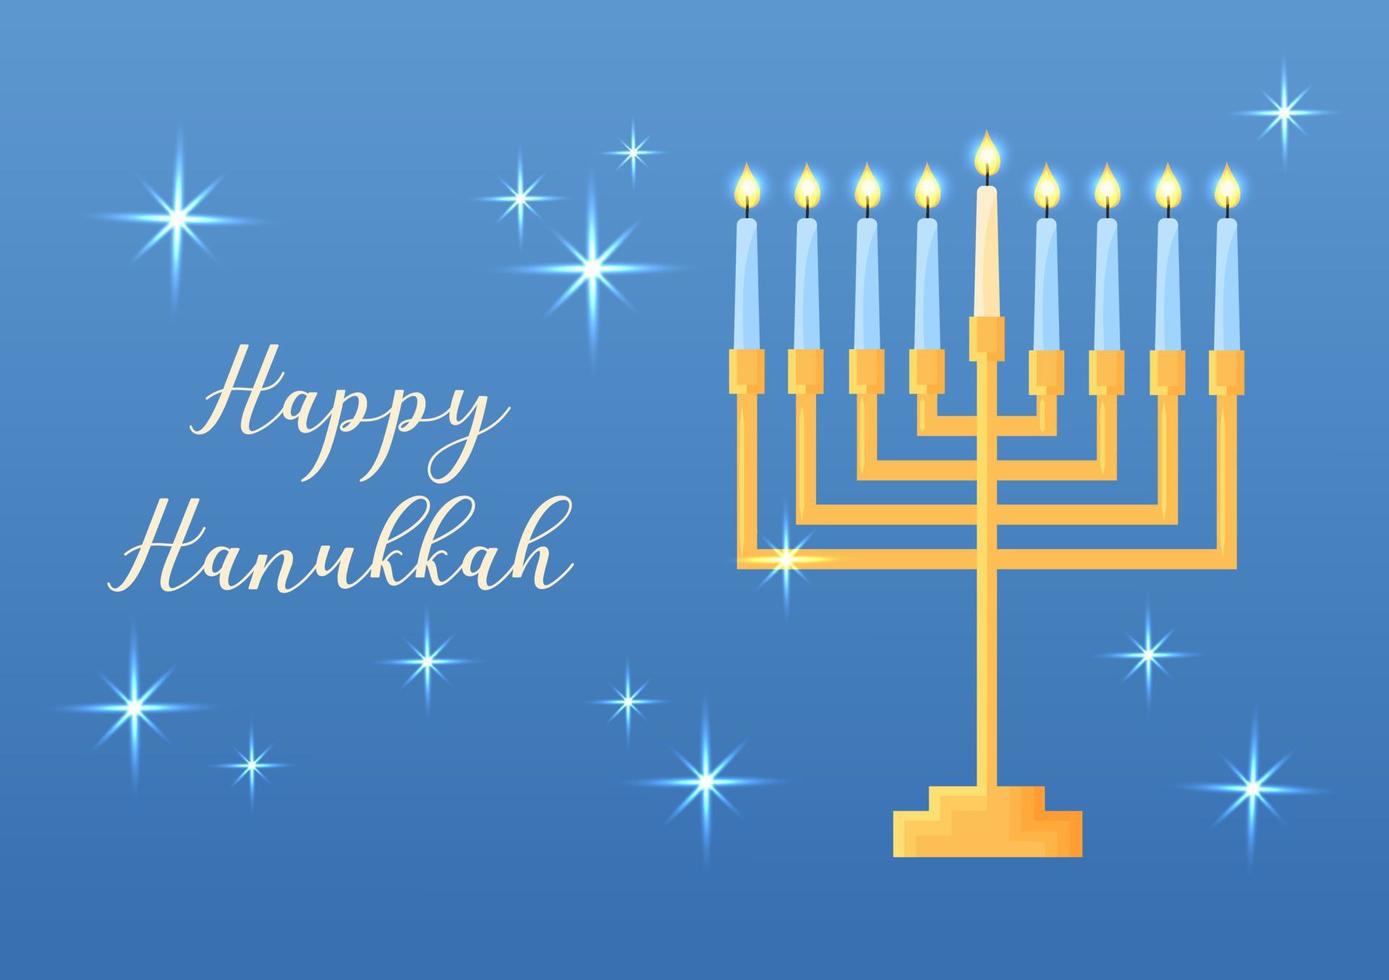 Hanukkah greeting card. Vector illustration with traditional Jewish religious holiday symbol. Shiny chanukiah candle holder. Menorah with burning candles